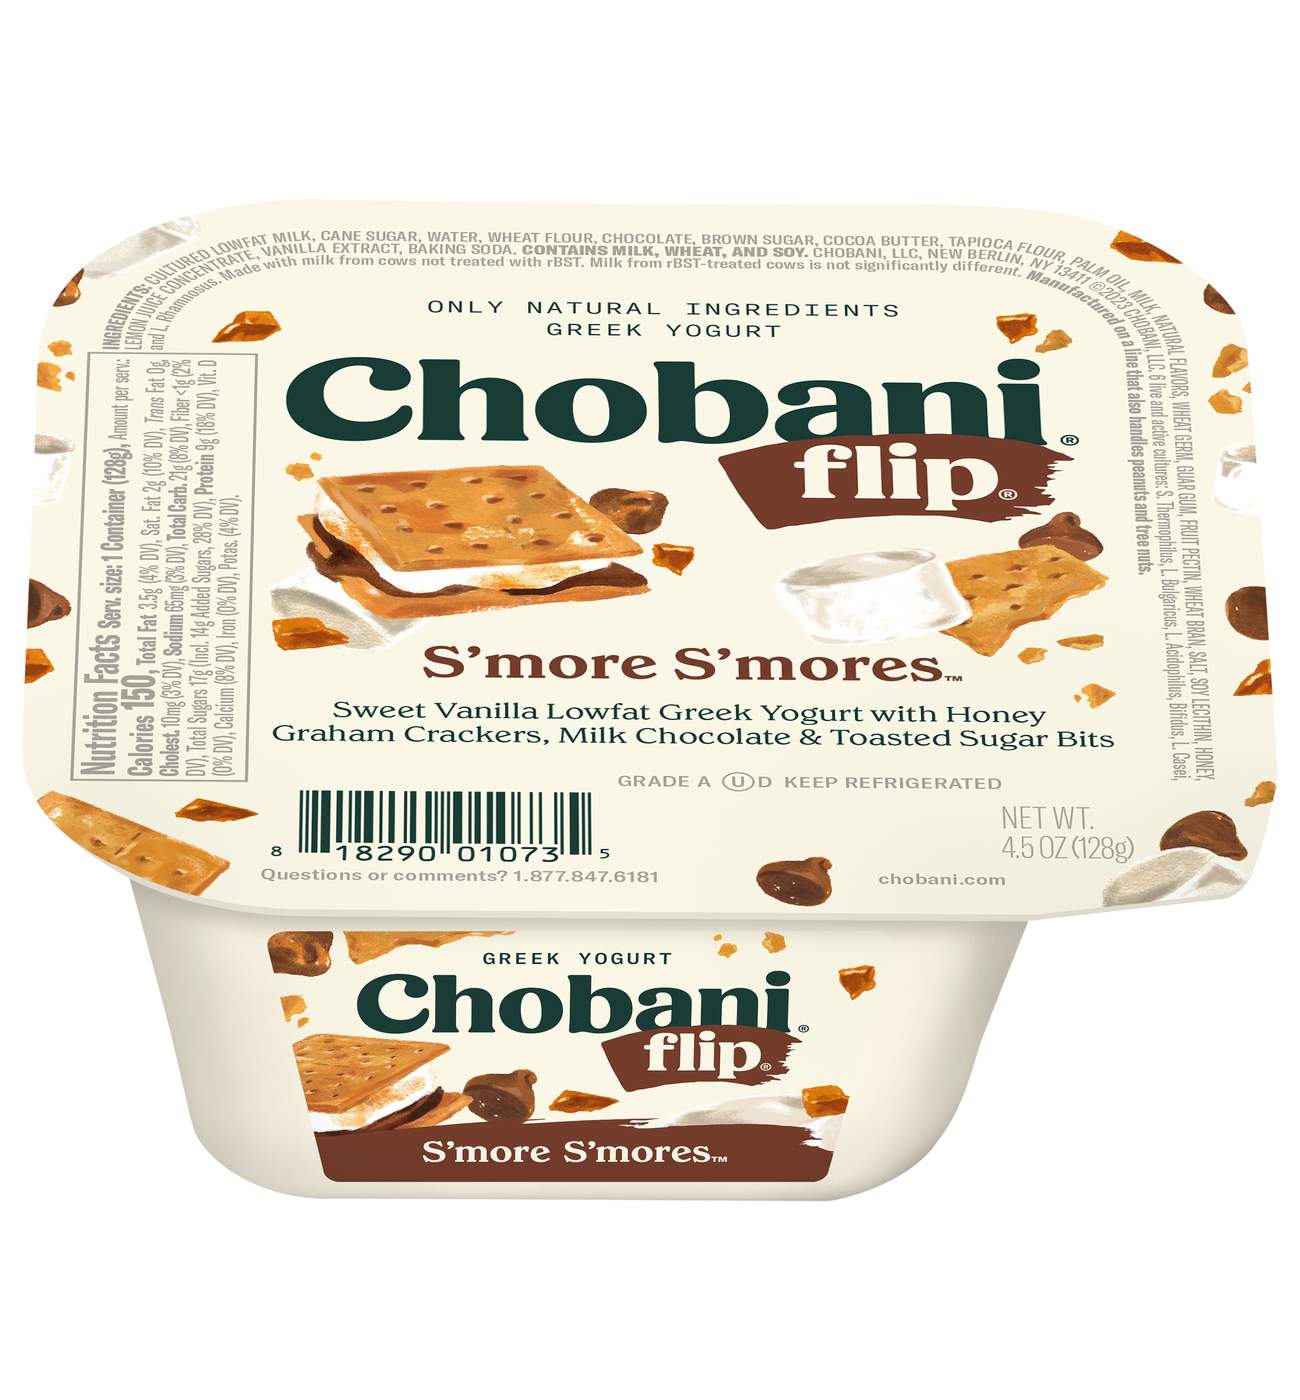 Chobani Flip Low-Fat S'more S'mores Greek Yogurt; image 1 of 2